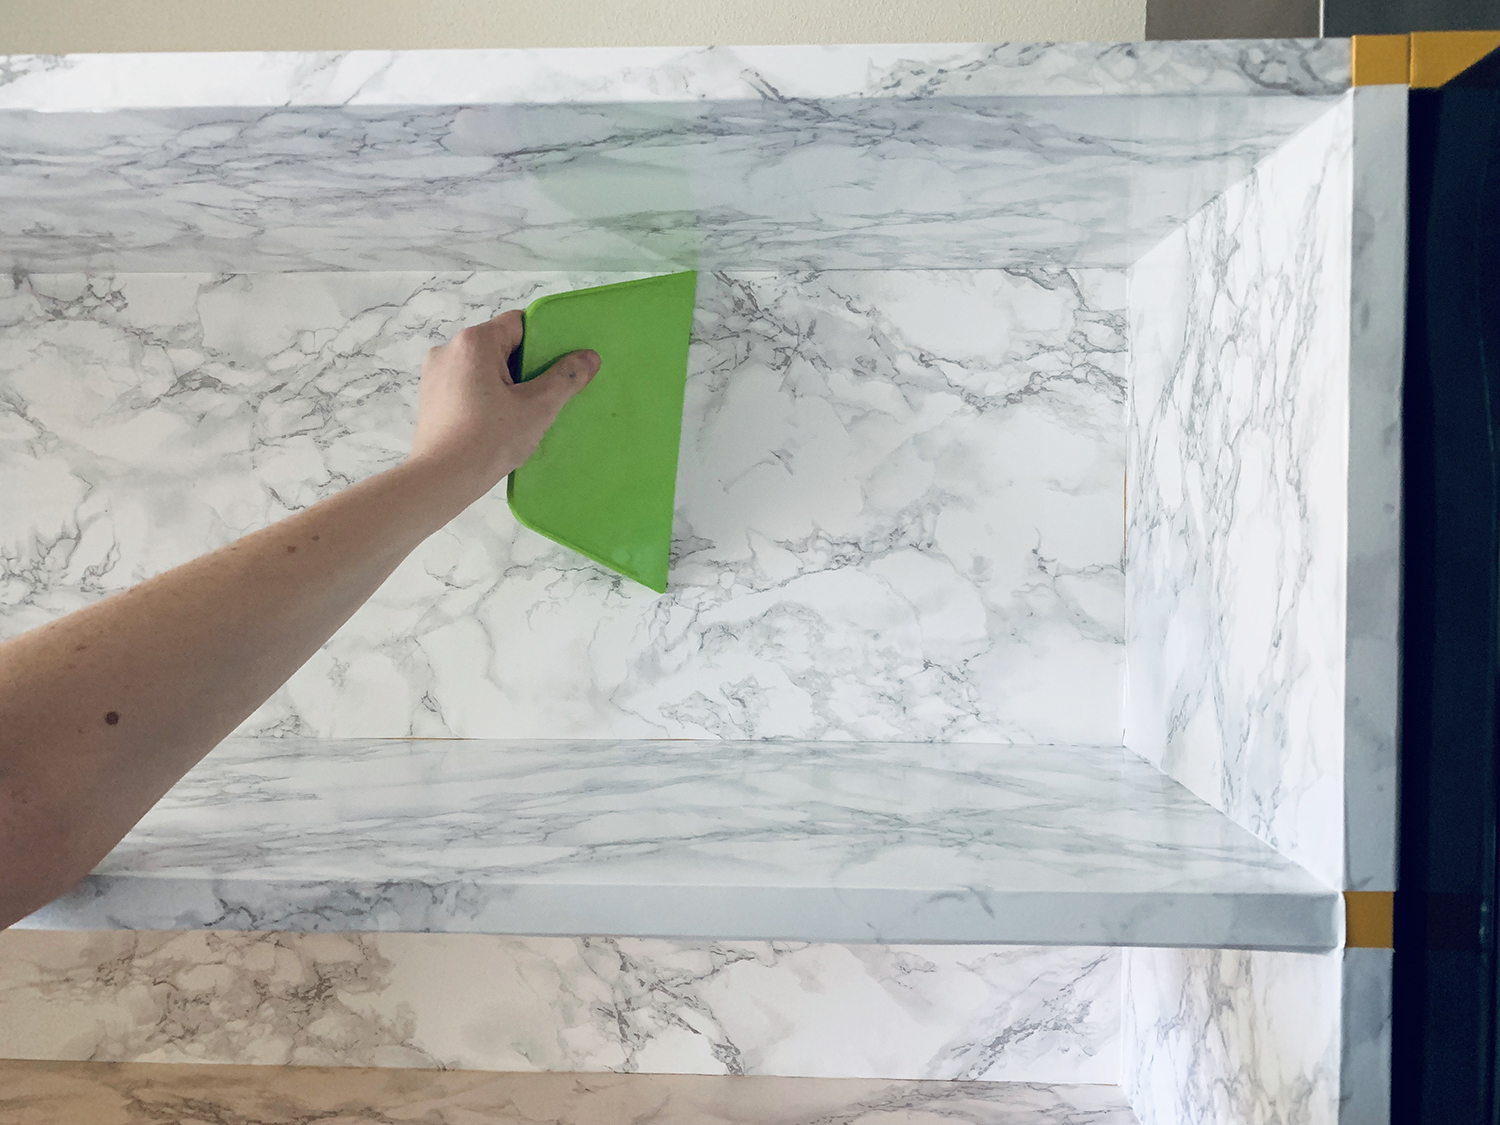 Renter DIY: Adding Marble Contact Paper to Open Shelves - Chris